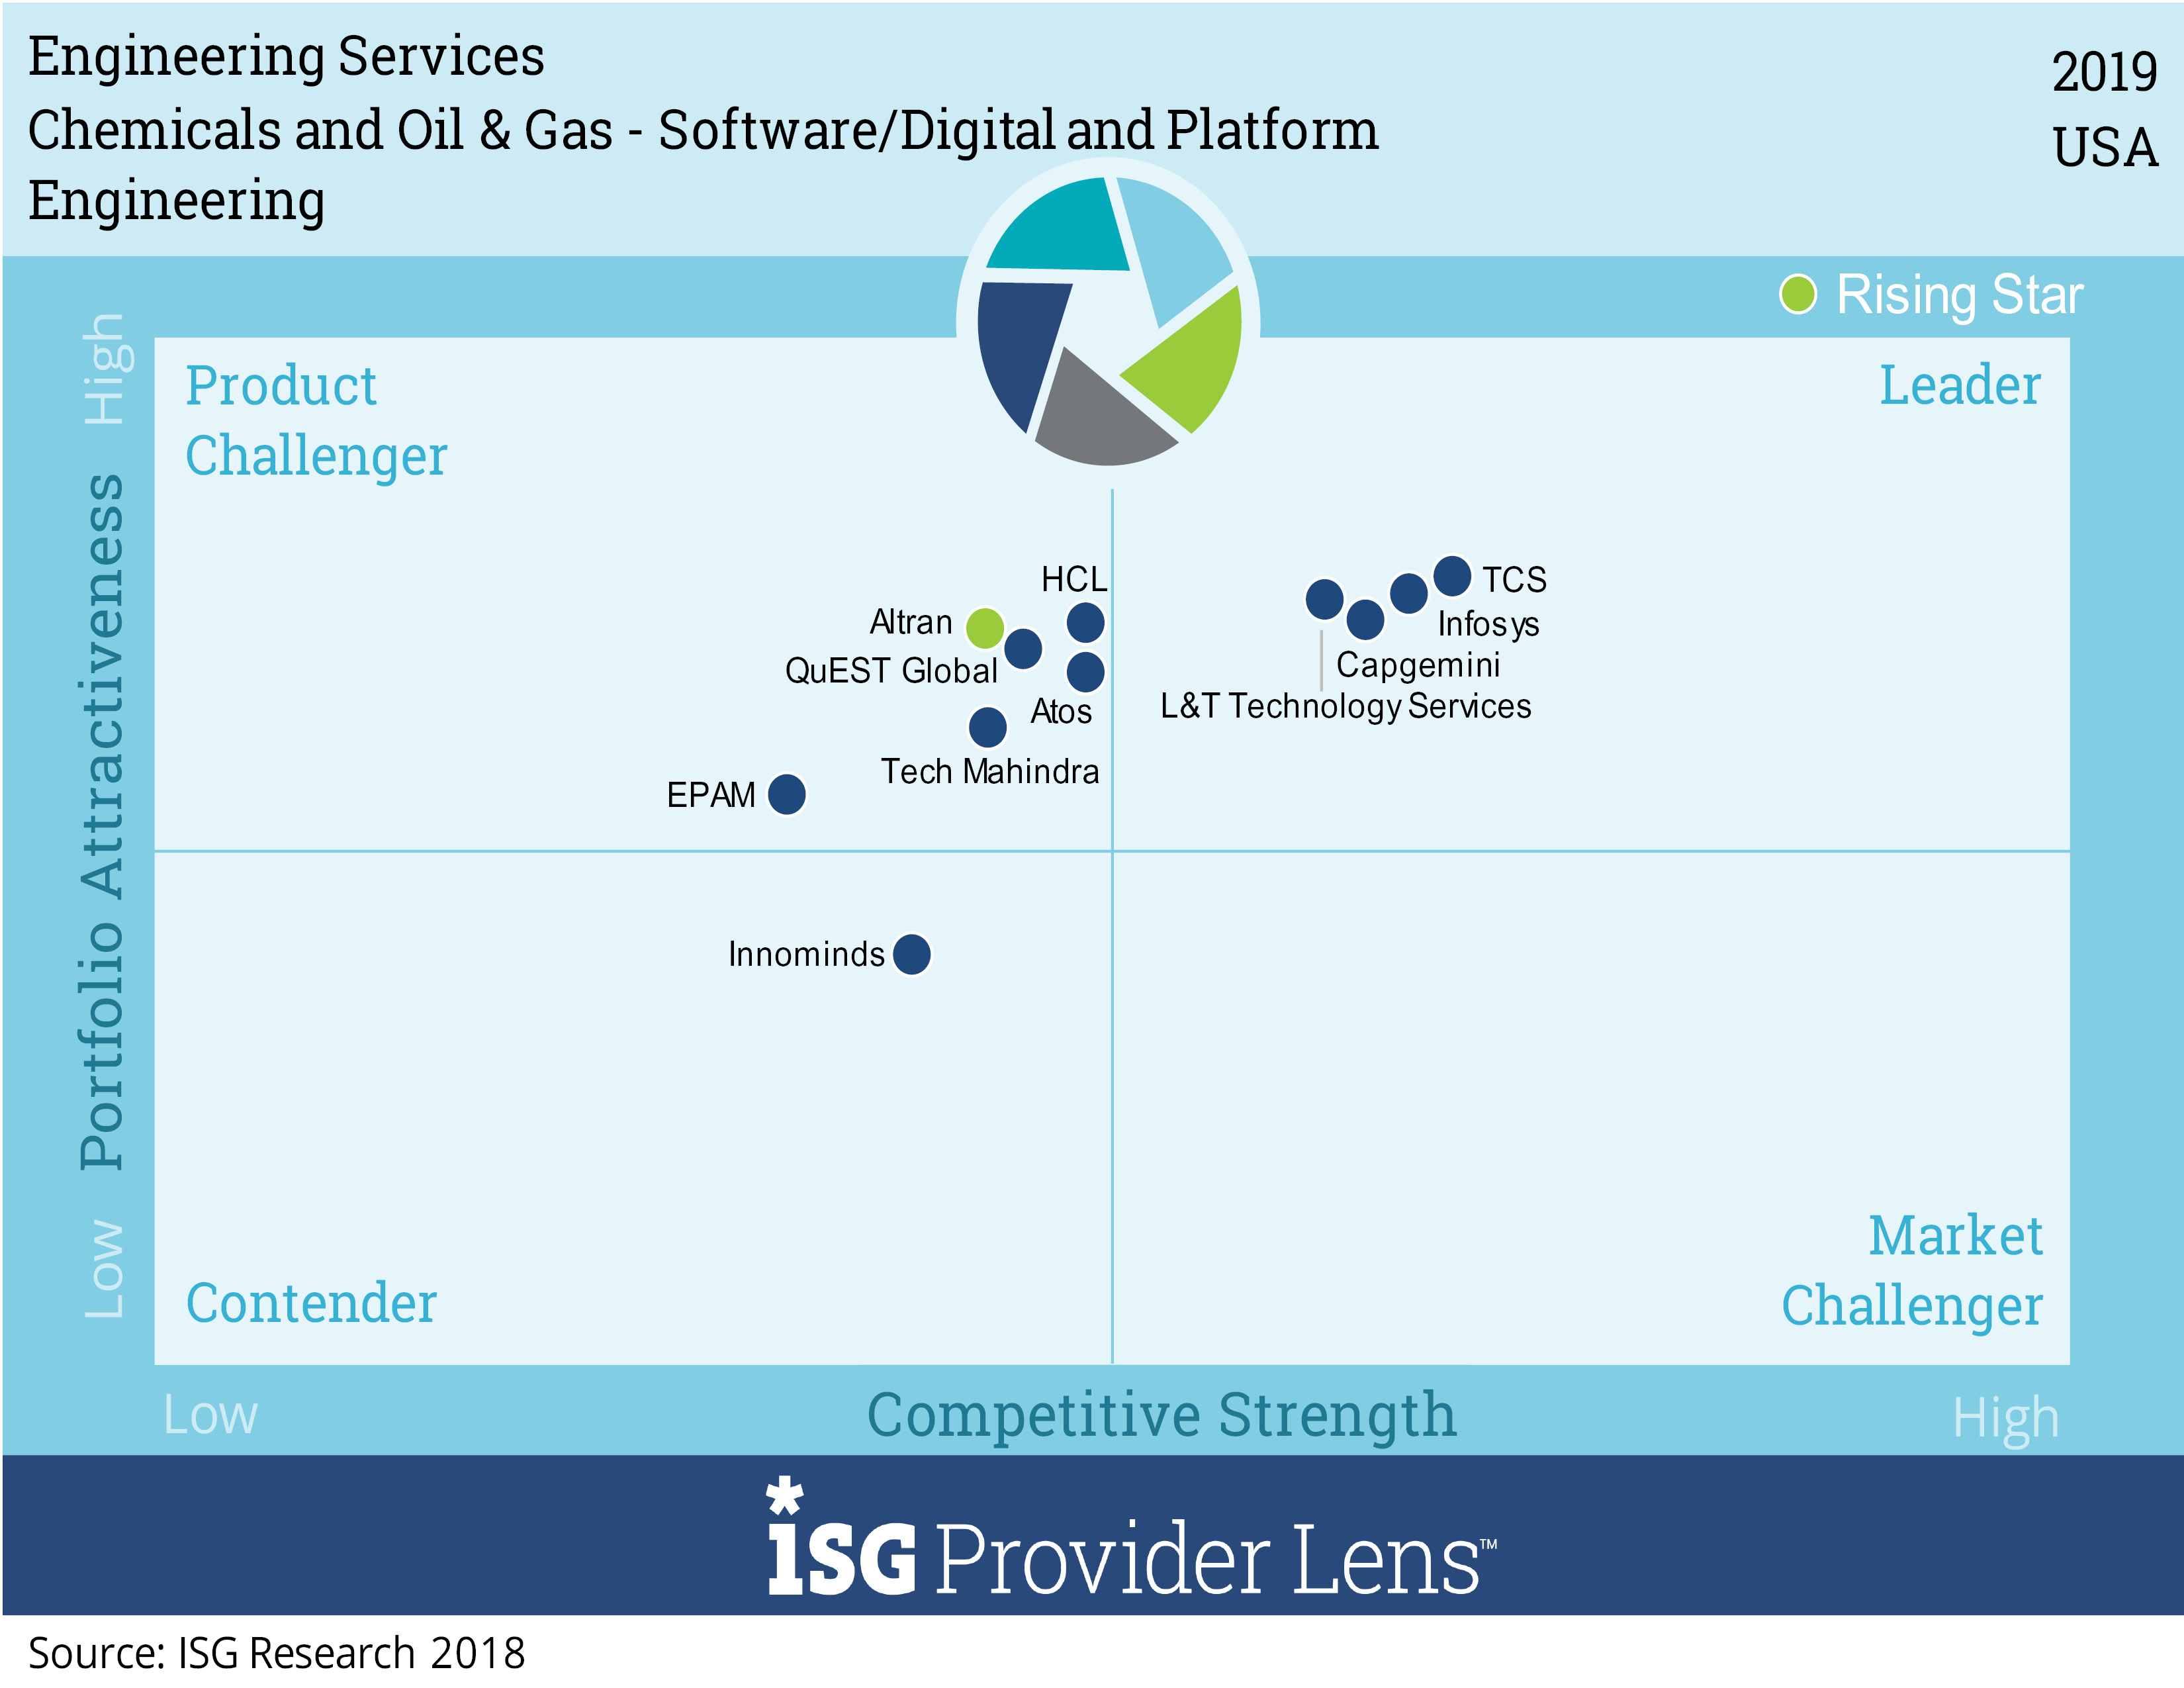 ISG Provider Lens Quadrant for Chemical Oil & Gas - Software/Digital & Platform Engineering - USA 2019 